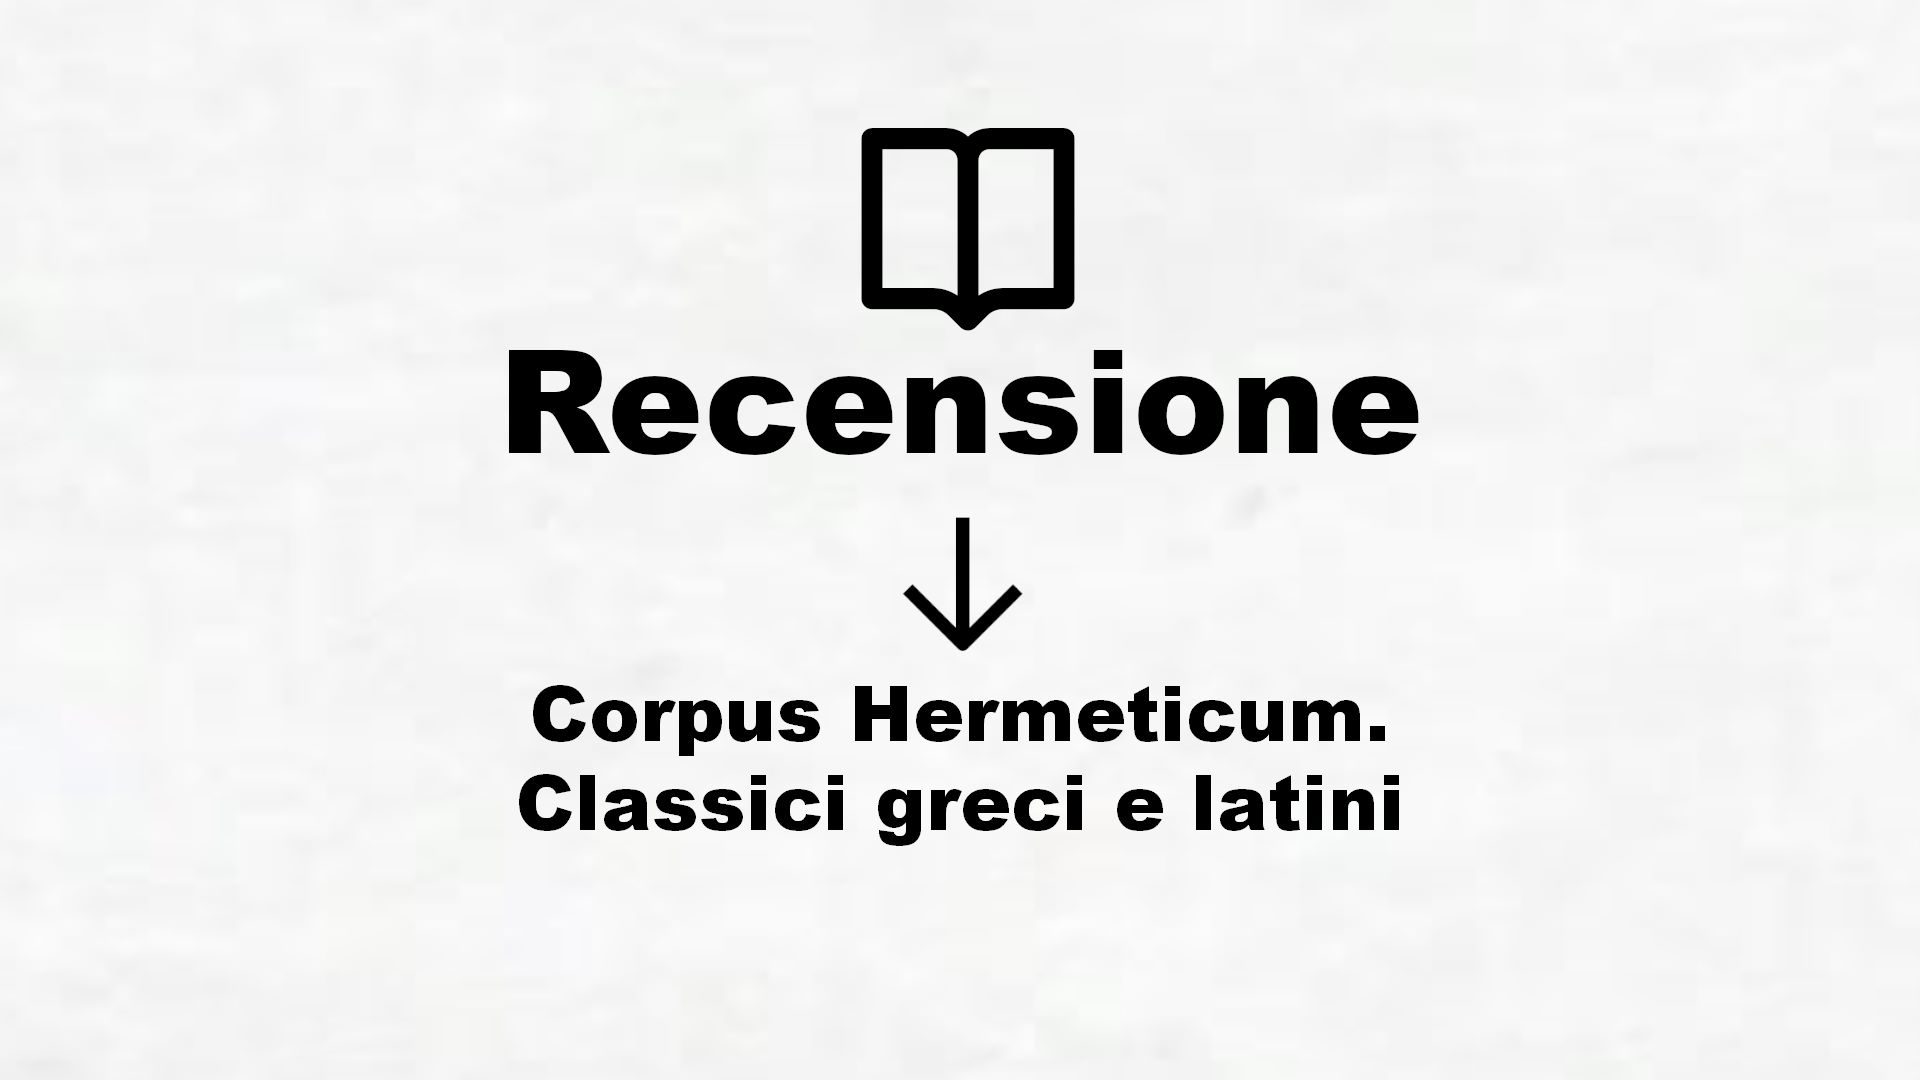 Corpus Hermeticum. Classici greci e latini – Recensione Libro